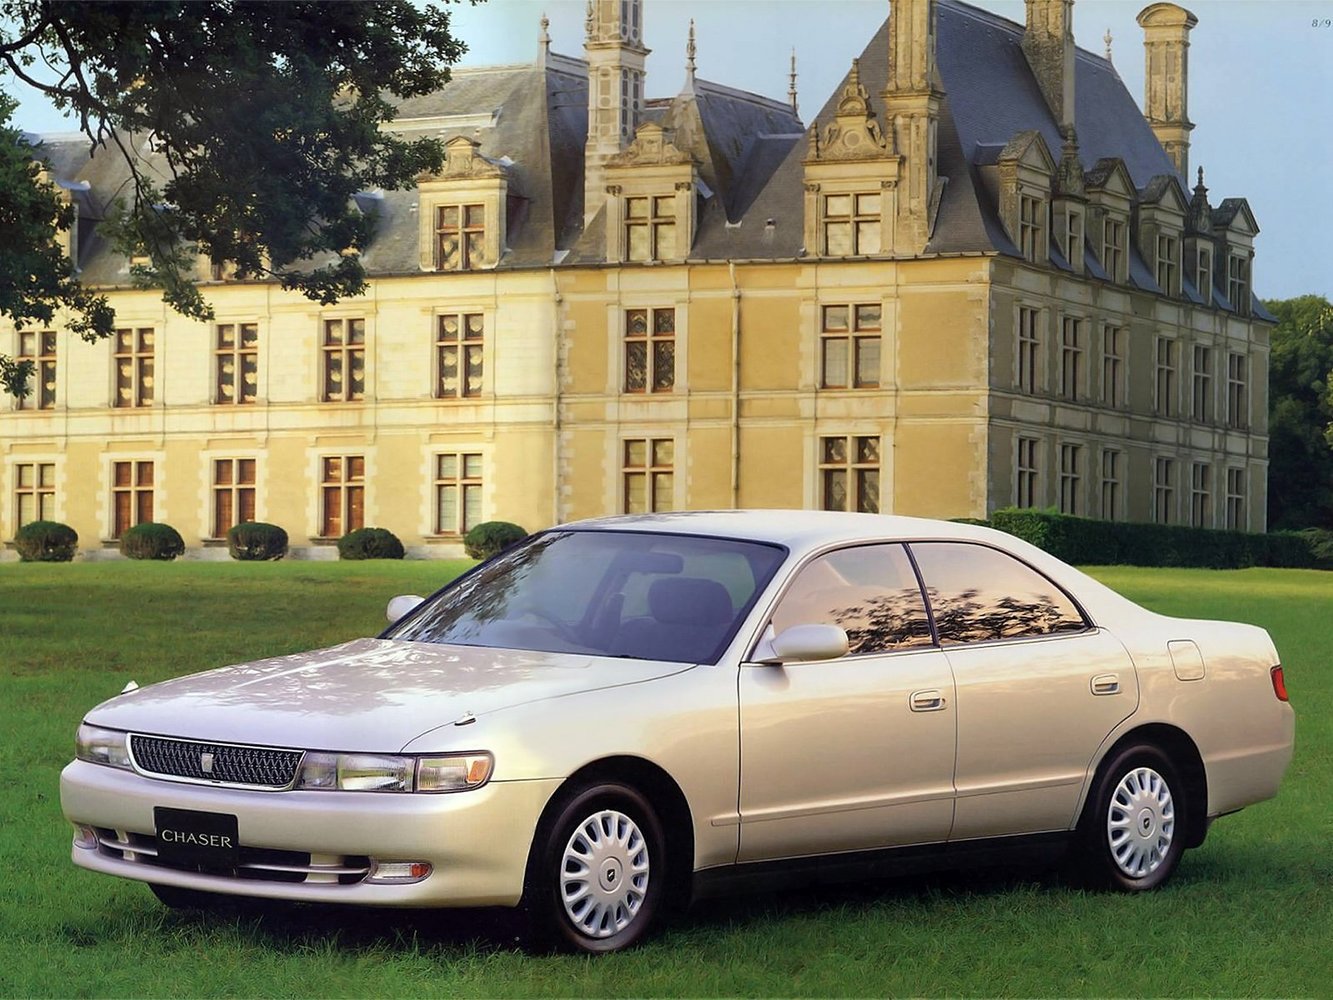 Toyota Chaser 1992 - 1994